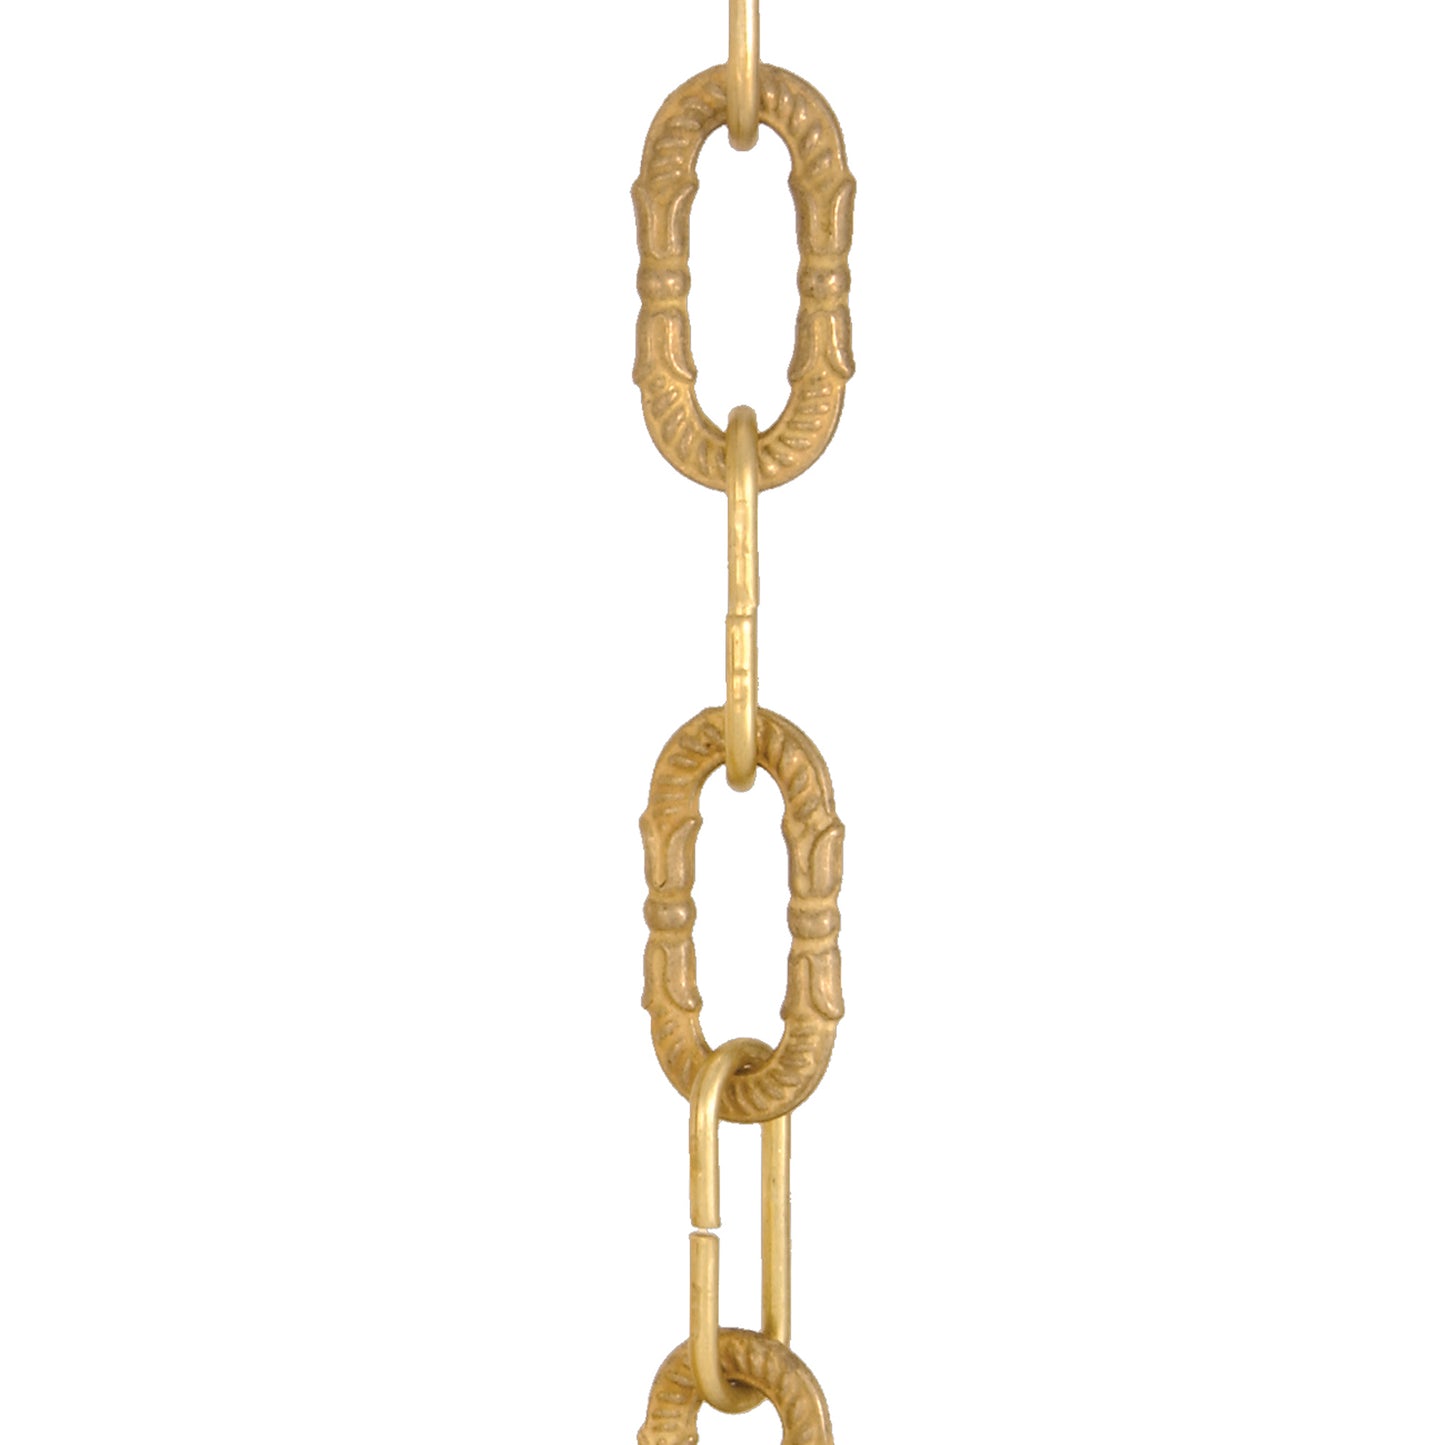 Die Cast, Decorative Brass Lamp Chain, Unfinished (13150)